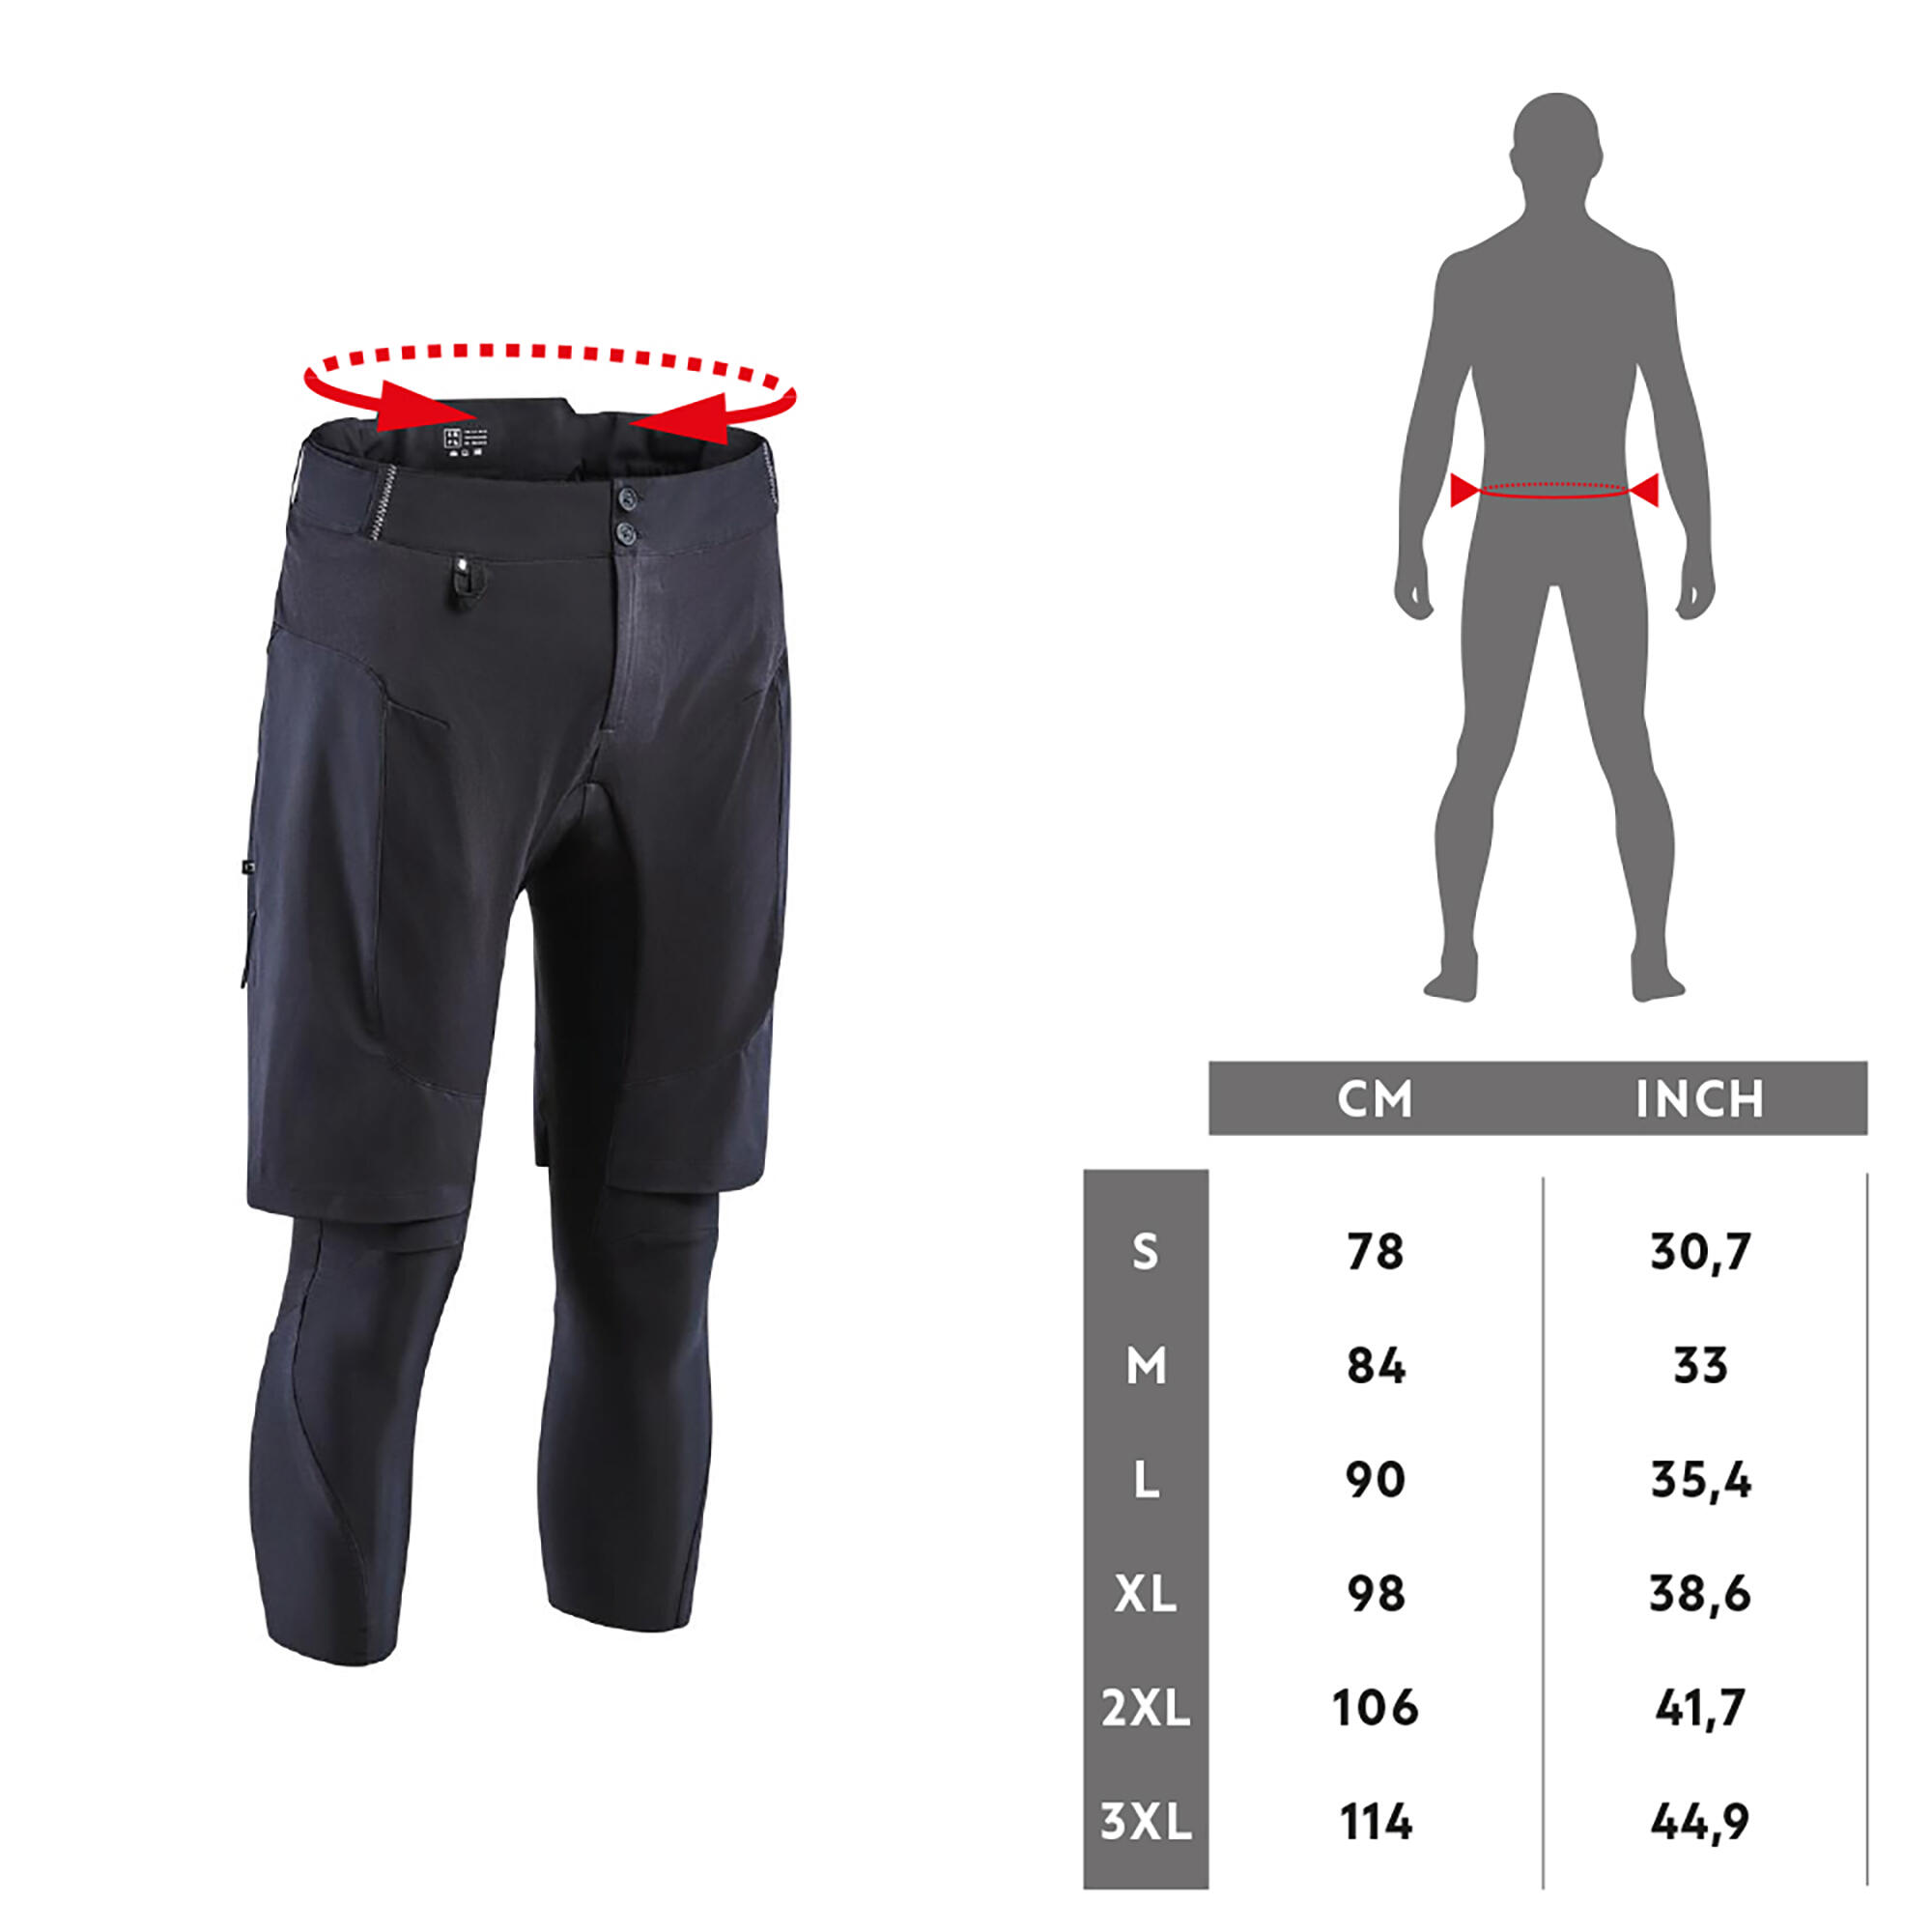 Men's 2-in-1 Mountain Bike Combo Shorts/Undershorts Expl 500 - Black 6/10